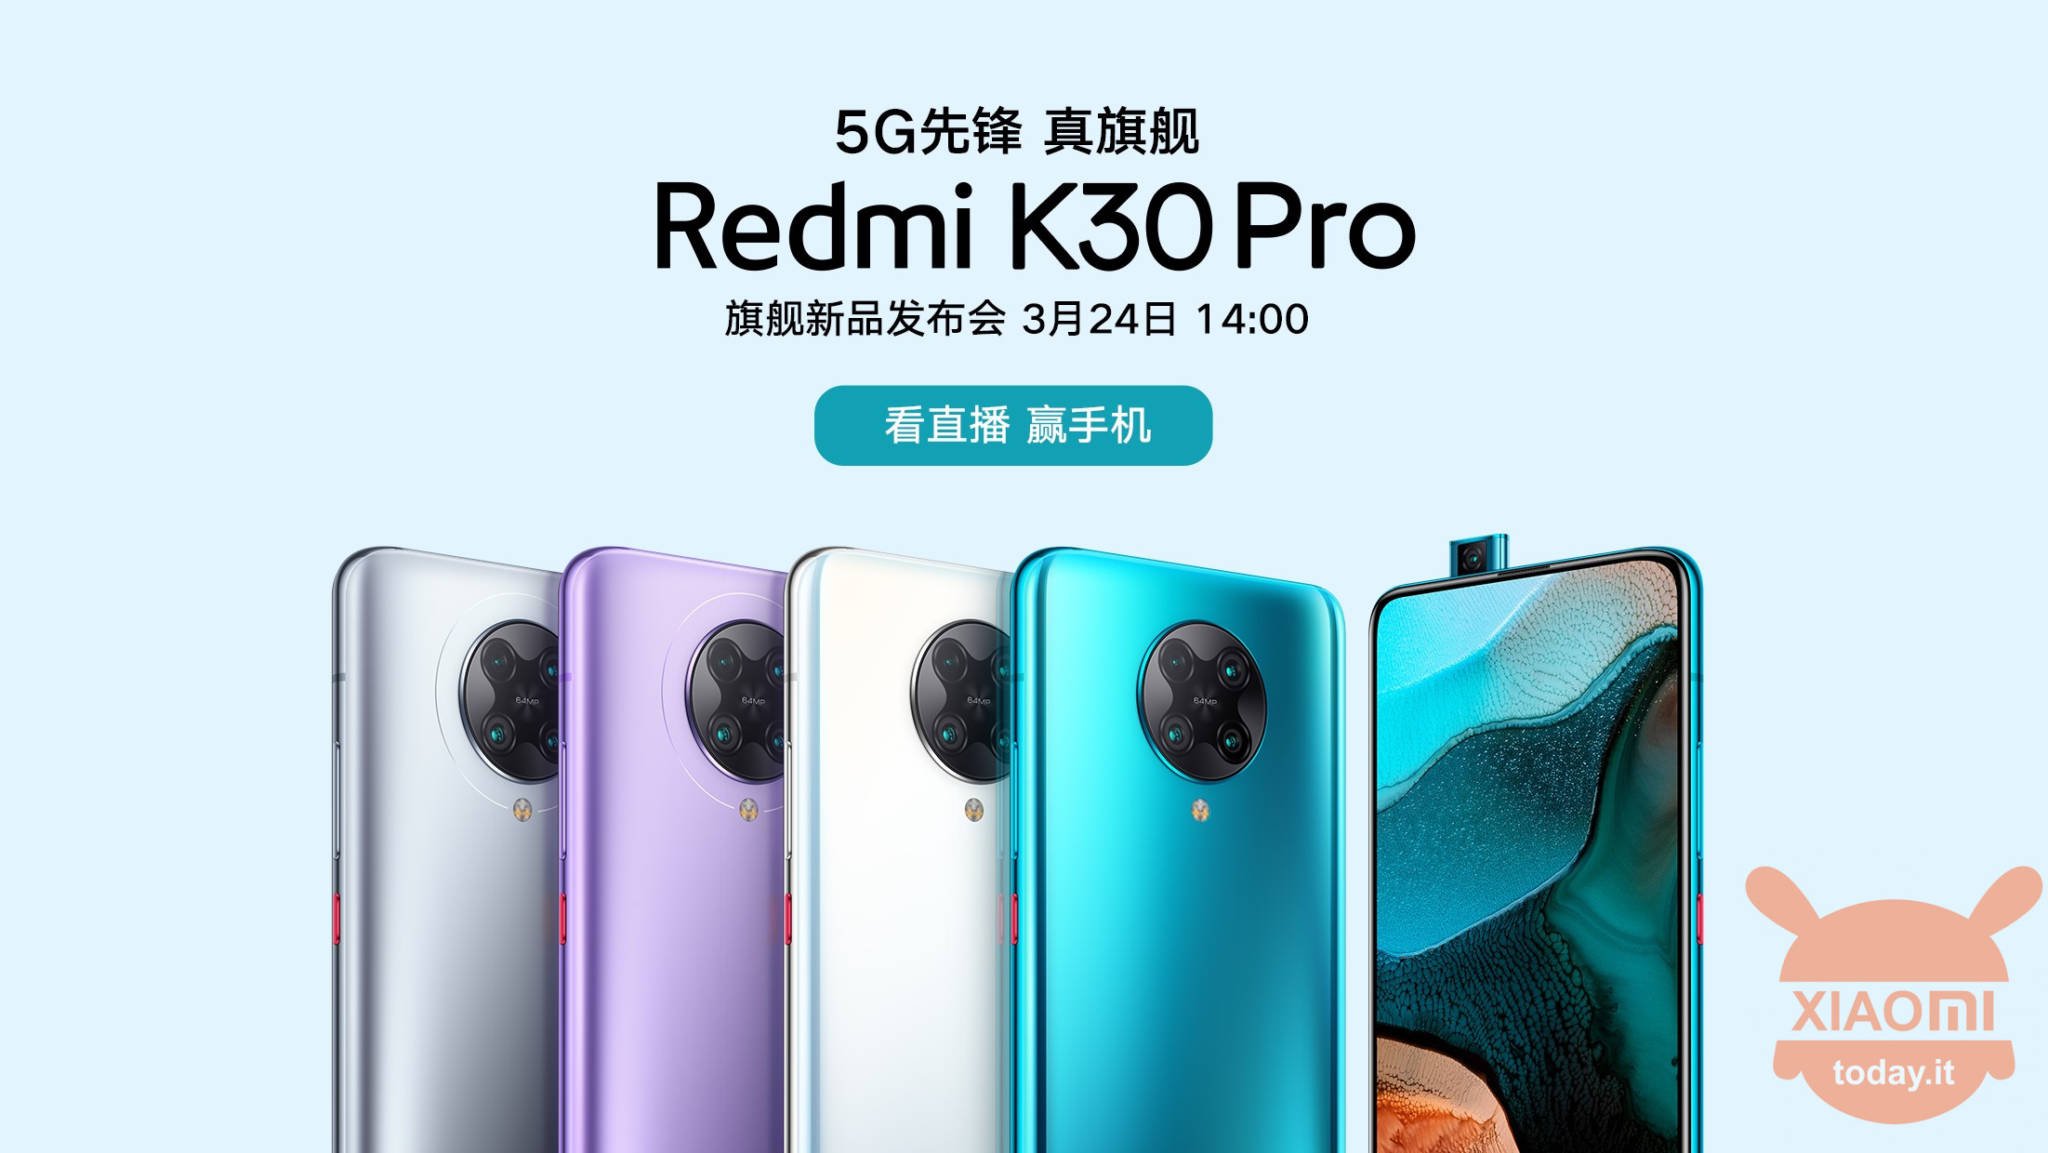 Redmi K30 Pro Redmi K30 Pro Zoom